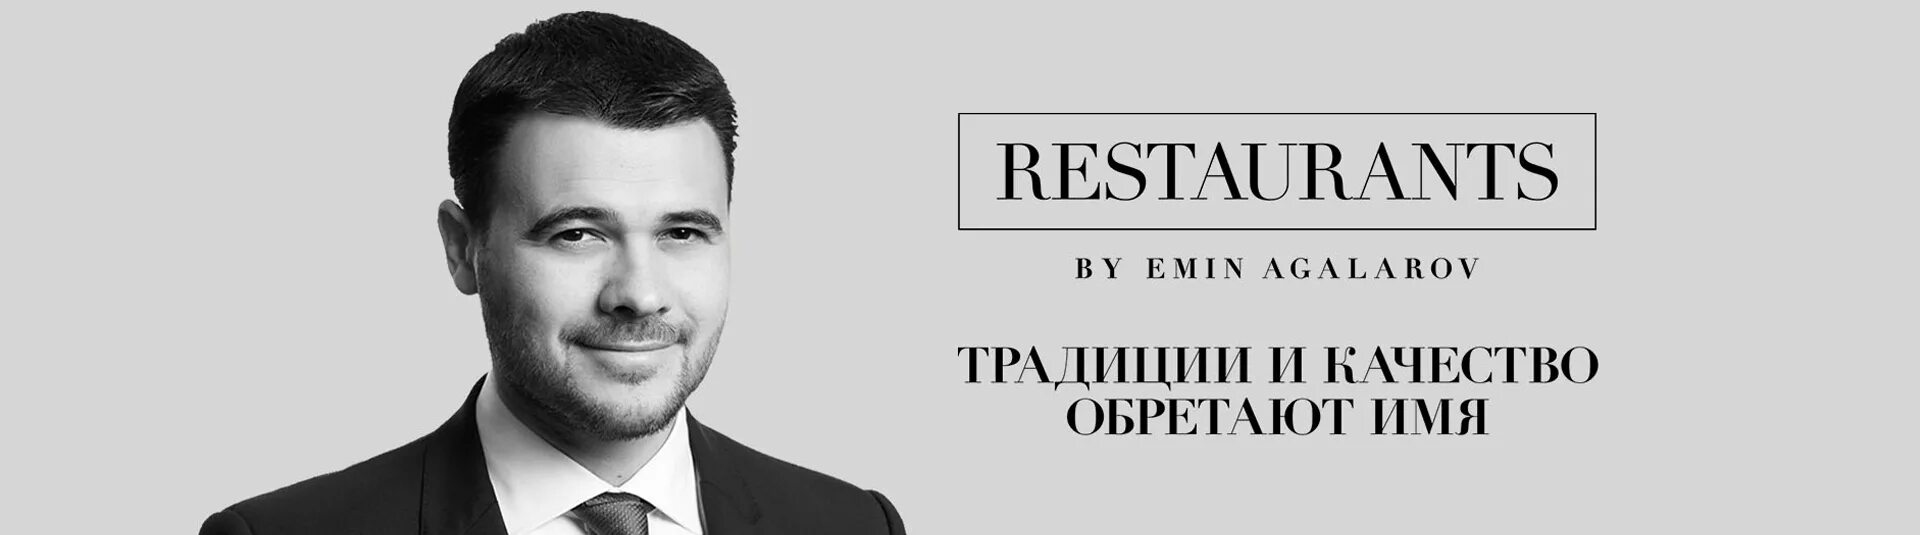 Аск агаларов. Restaurants by Emin Agalarov. Рестораны Эмина Агаларова. Restorans by Emin Agalarov лого.